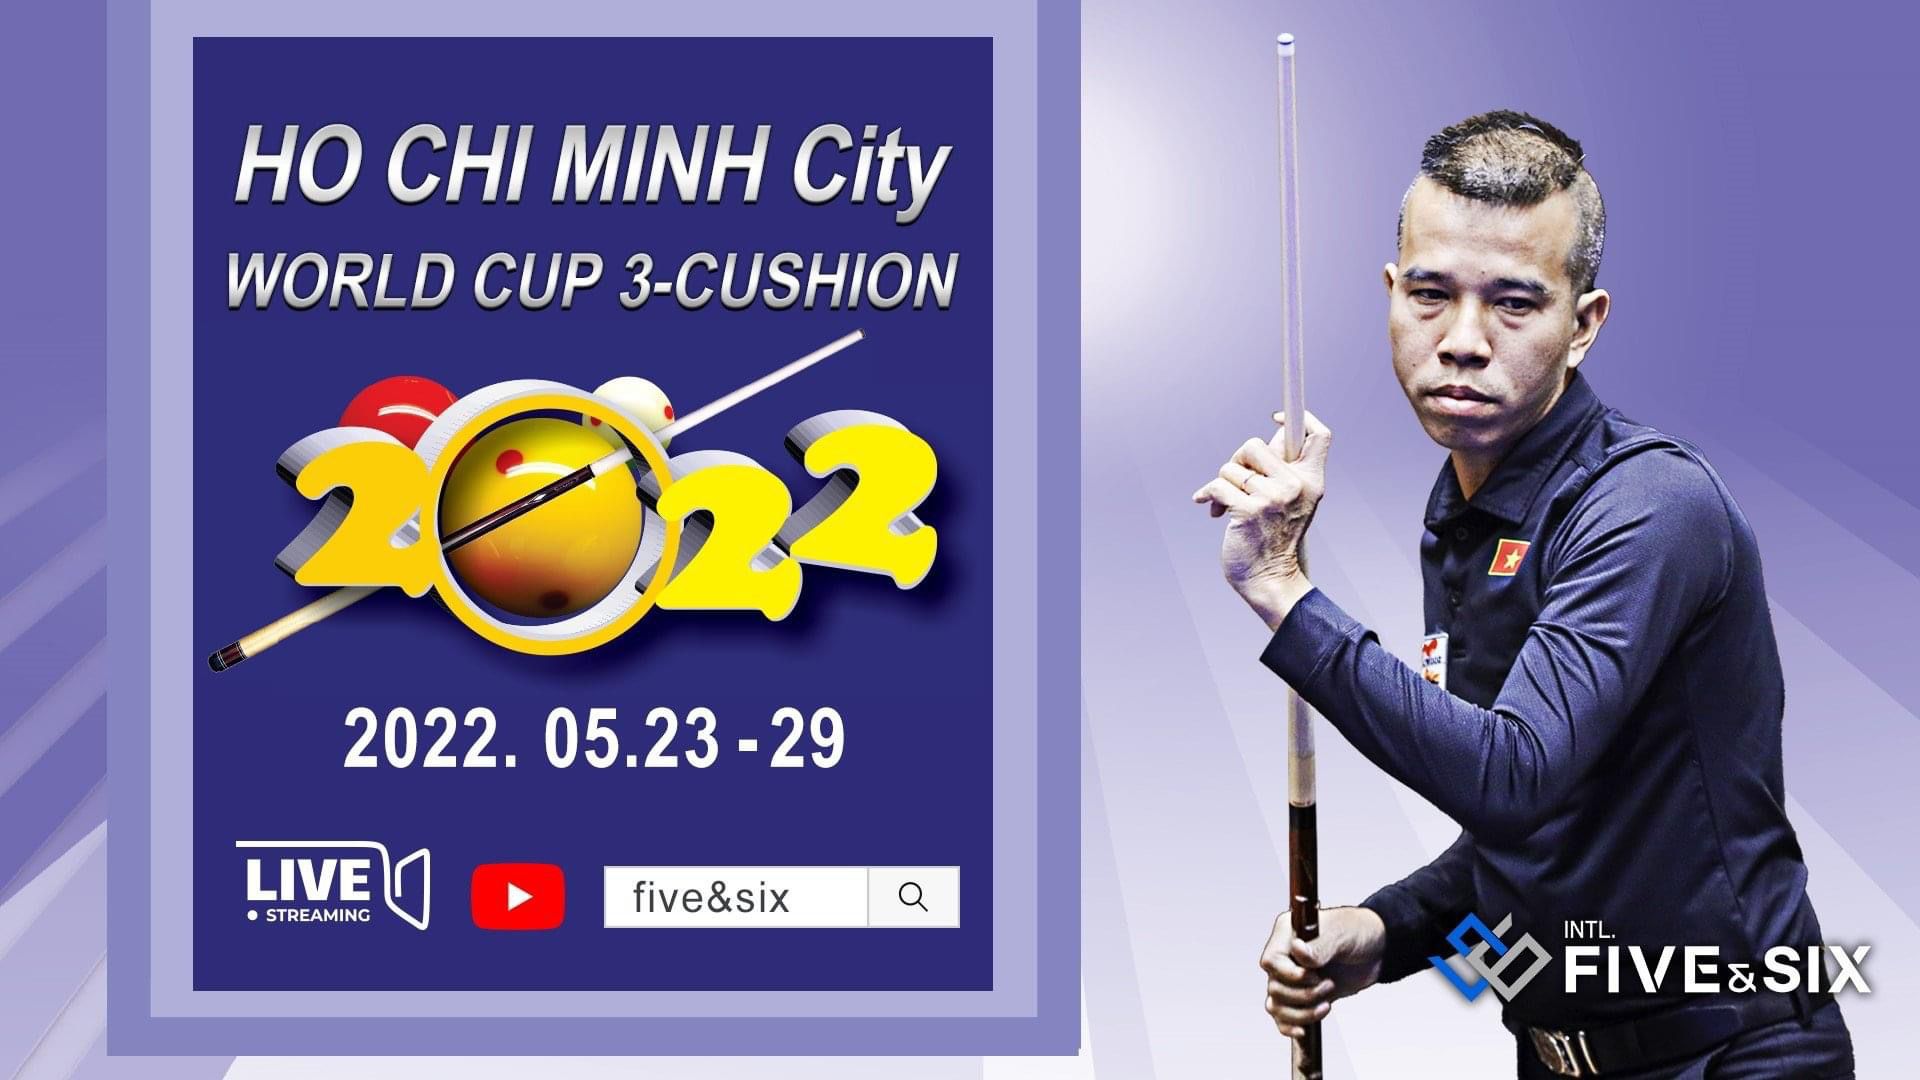 WORLD CUP HO CHI MINH CITY